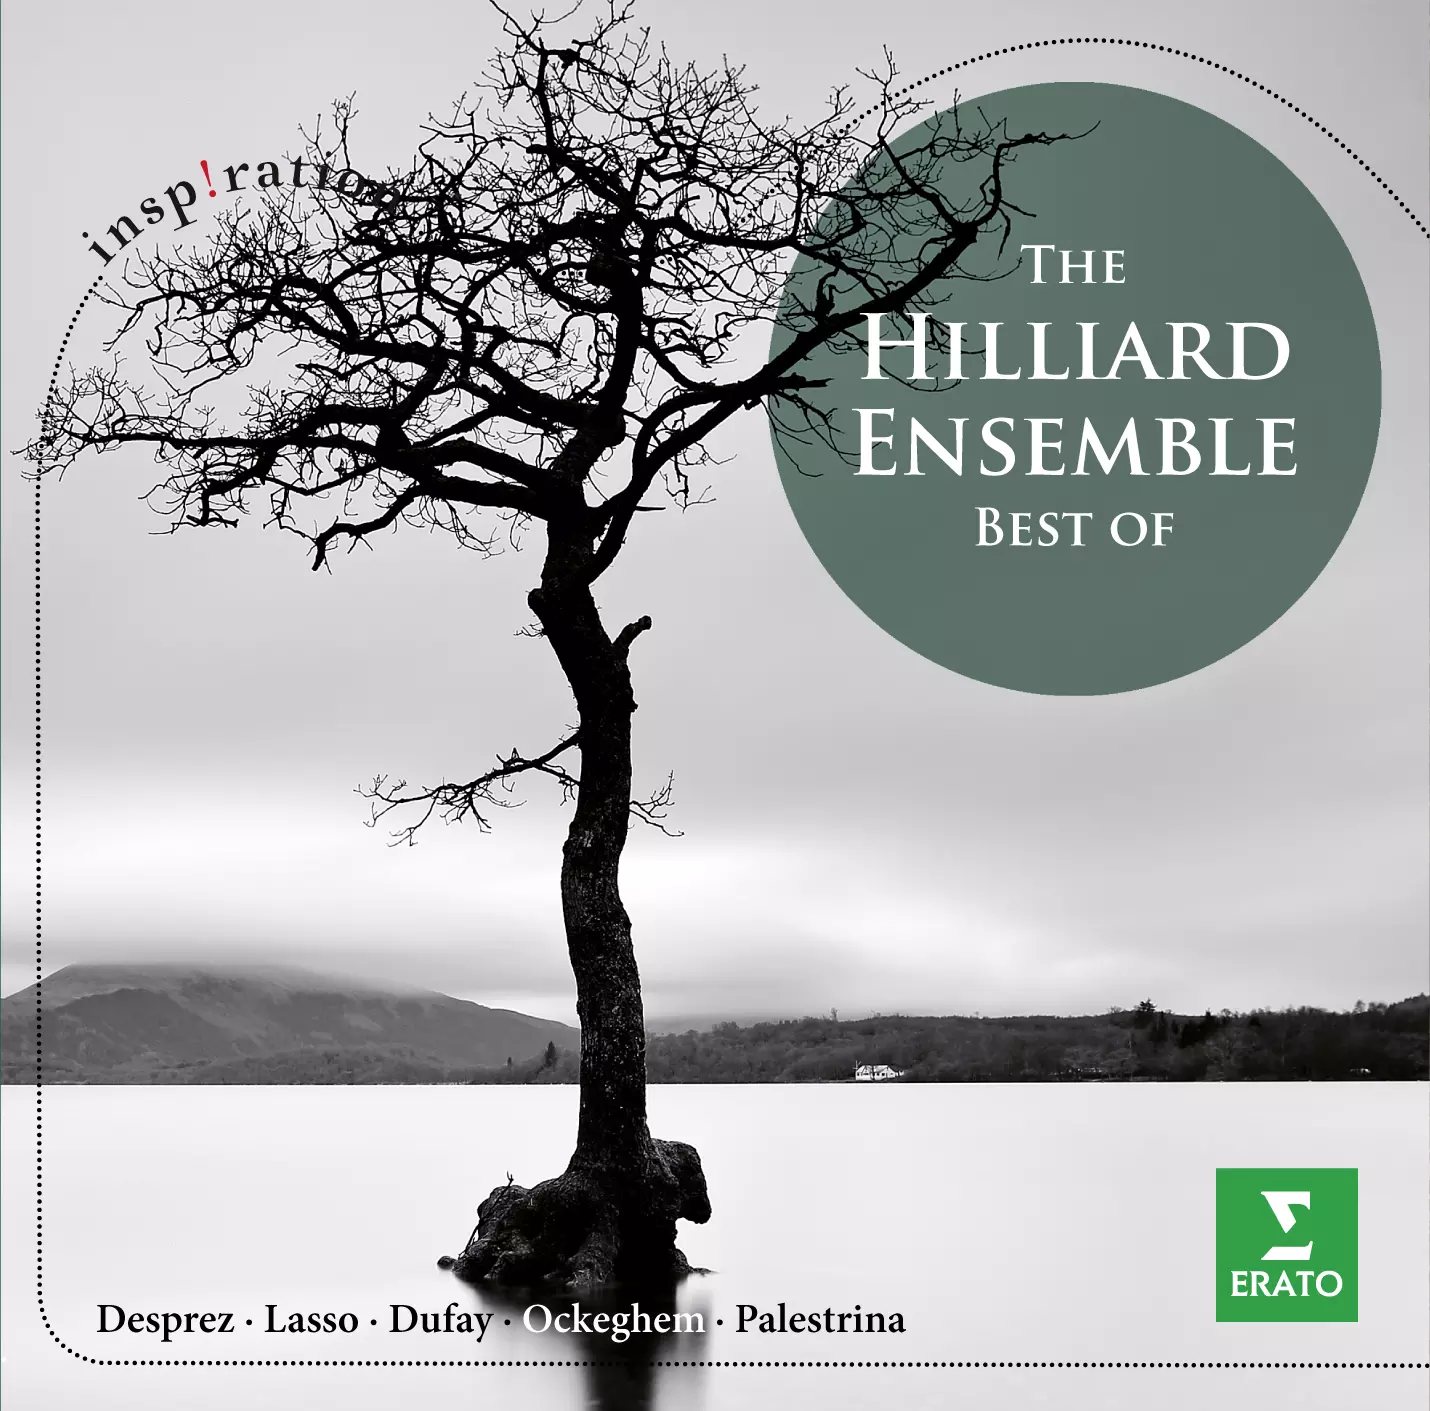 Best of The Hilliard Ensemble